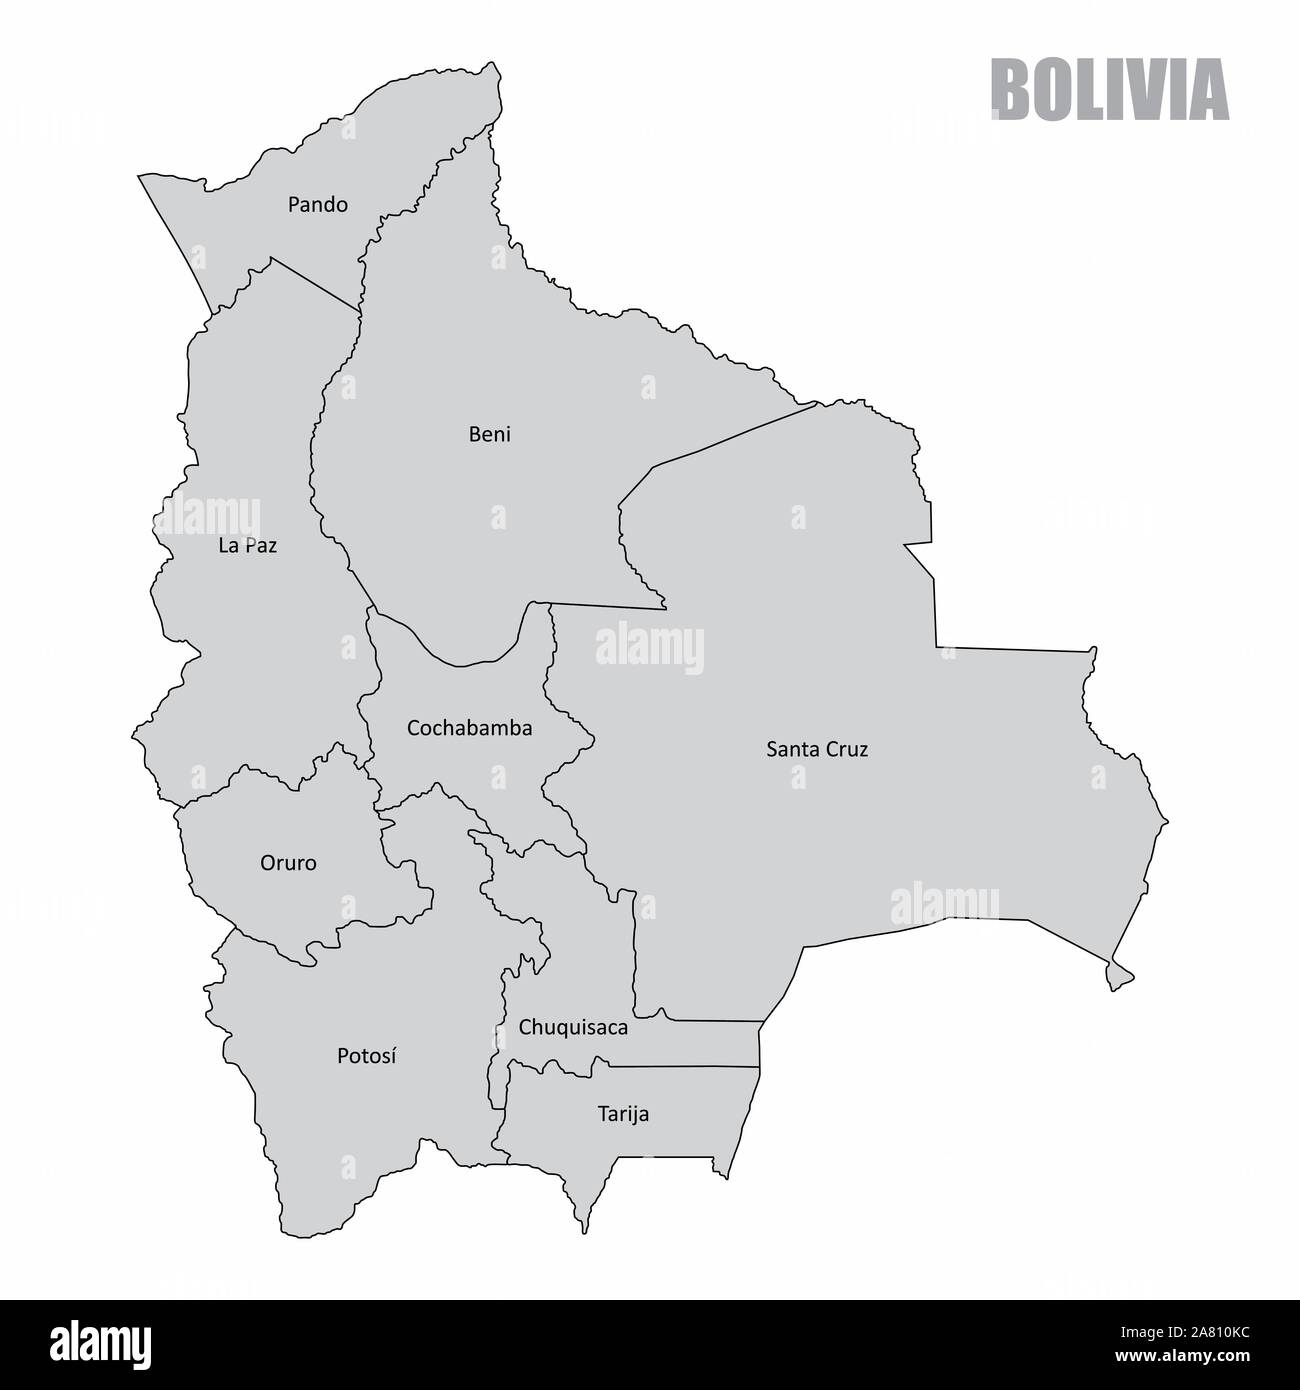 Bolivia regions map Stock Vector